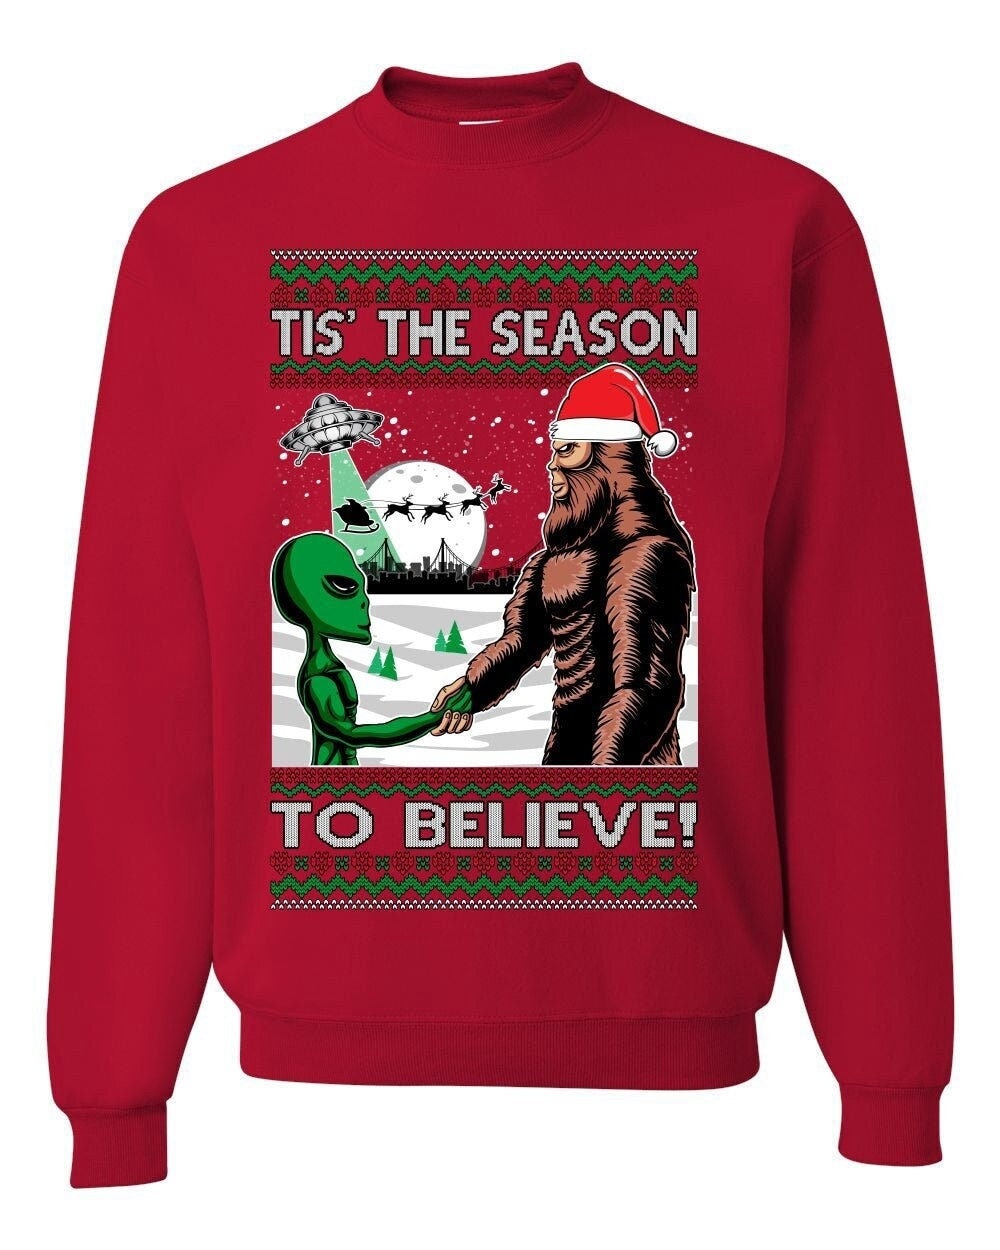 Discover Bigfoot Tis' The Season to Believe in Conspiracies Aliens Ufo Ugly Christmas Sweatshirt